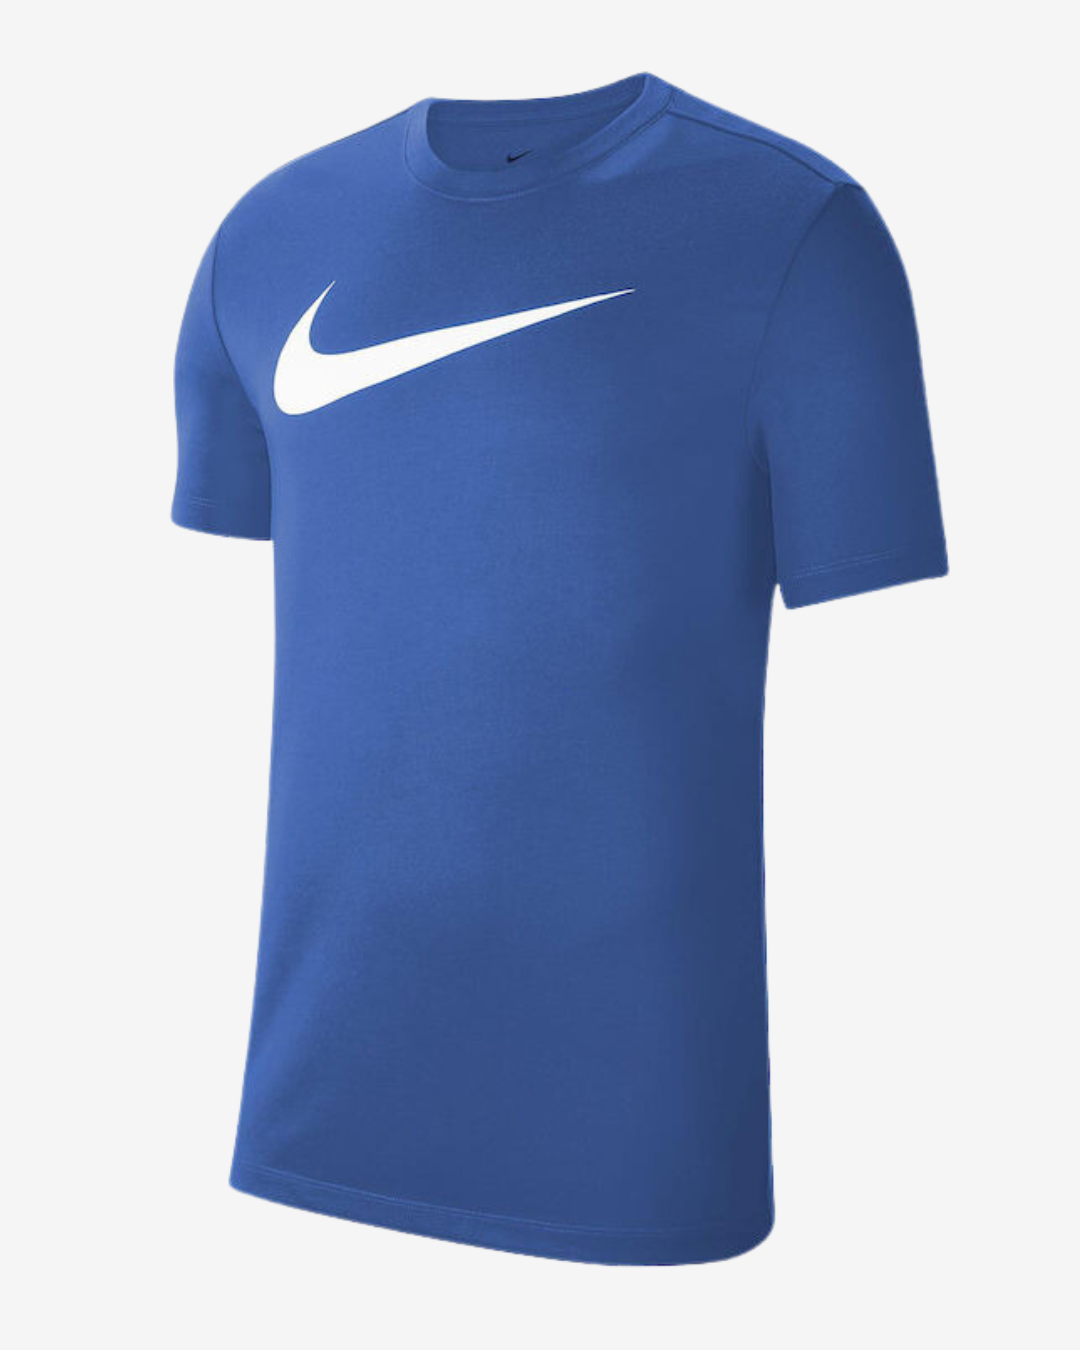 Nike Dri-fit park 20 t-shirt - Blå - Str. S - Modish.dk